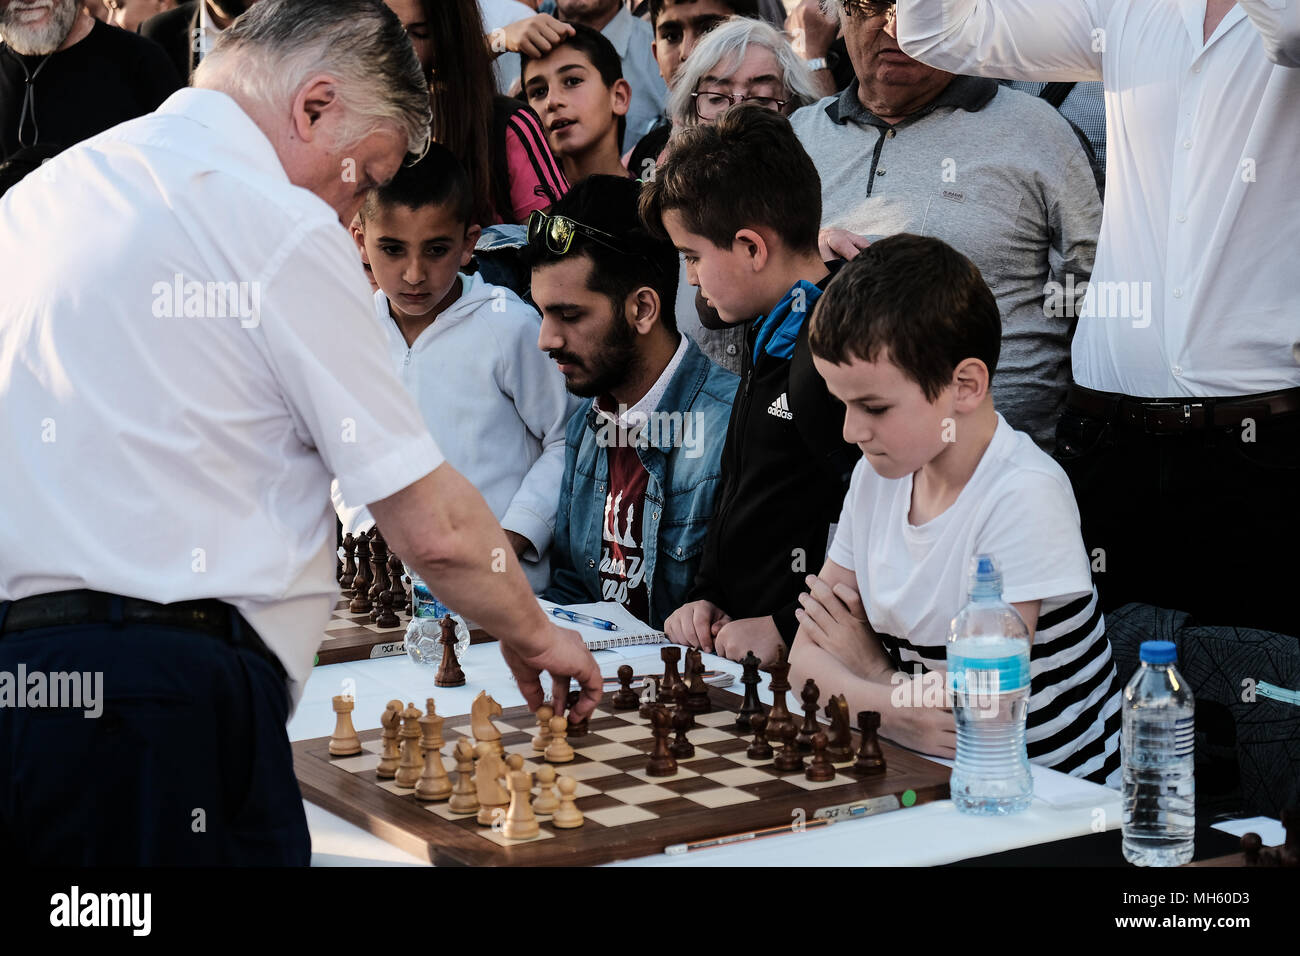 Anatoly Karpov (Chess Grandmaster) - On This Day